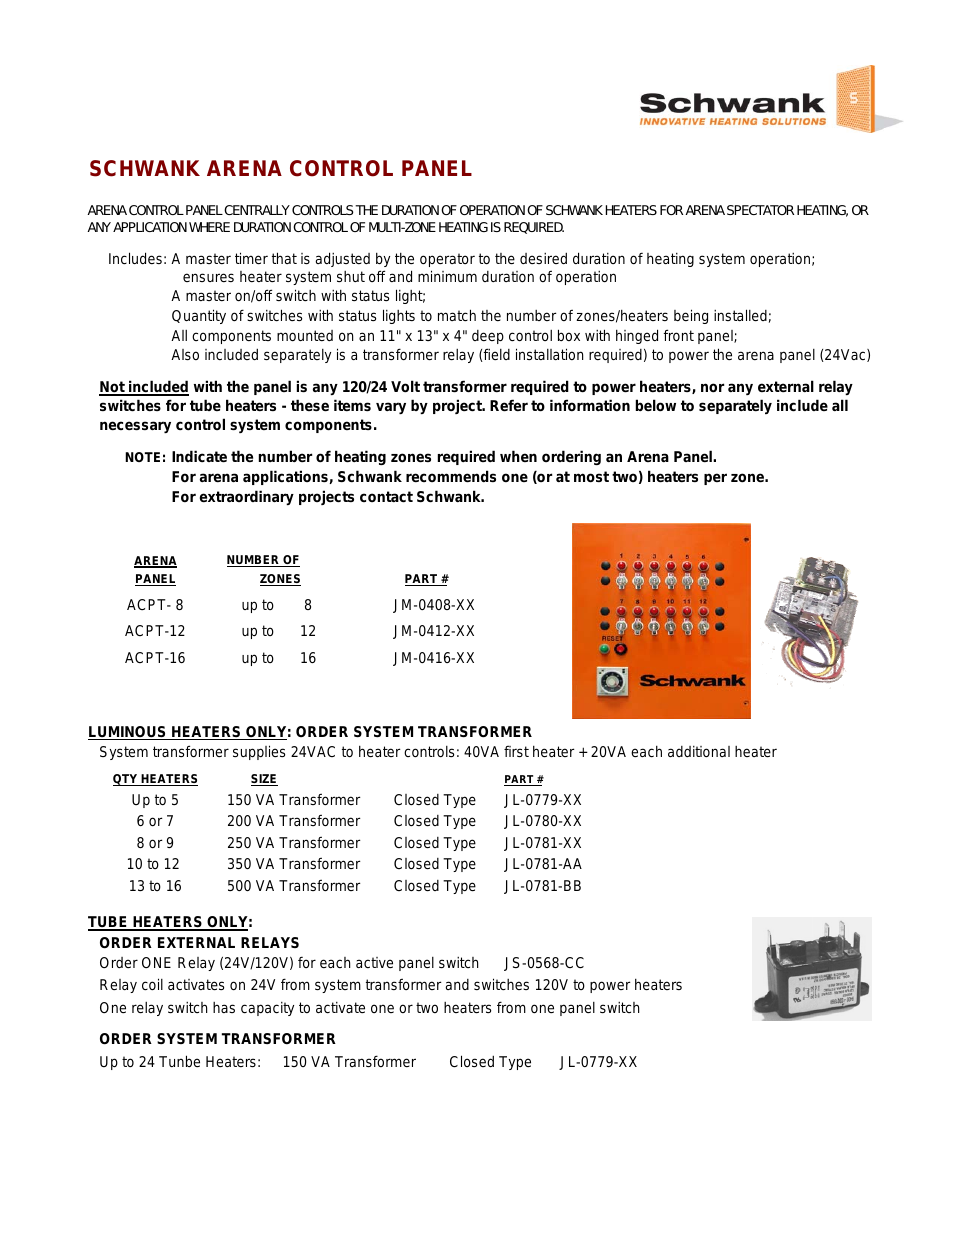 Control Panel - Arena